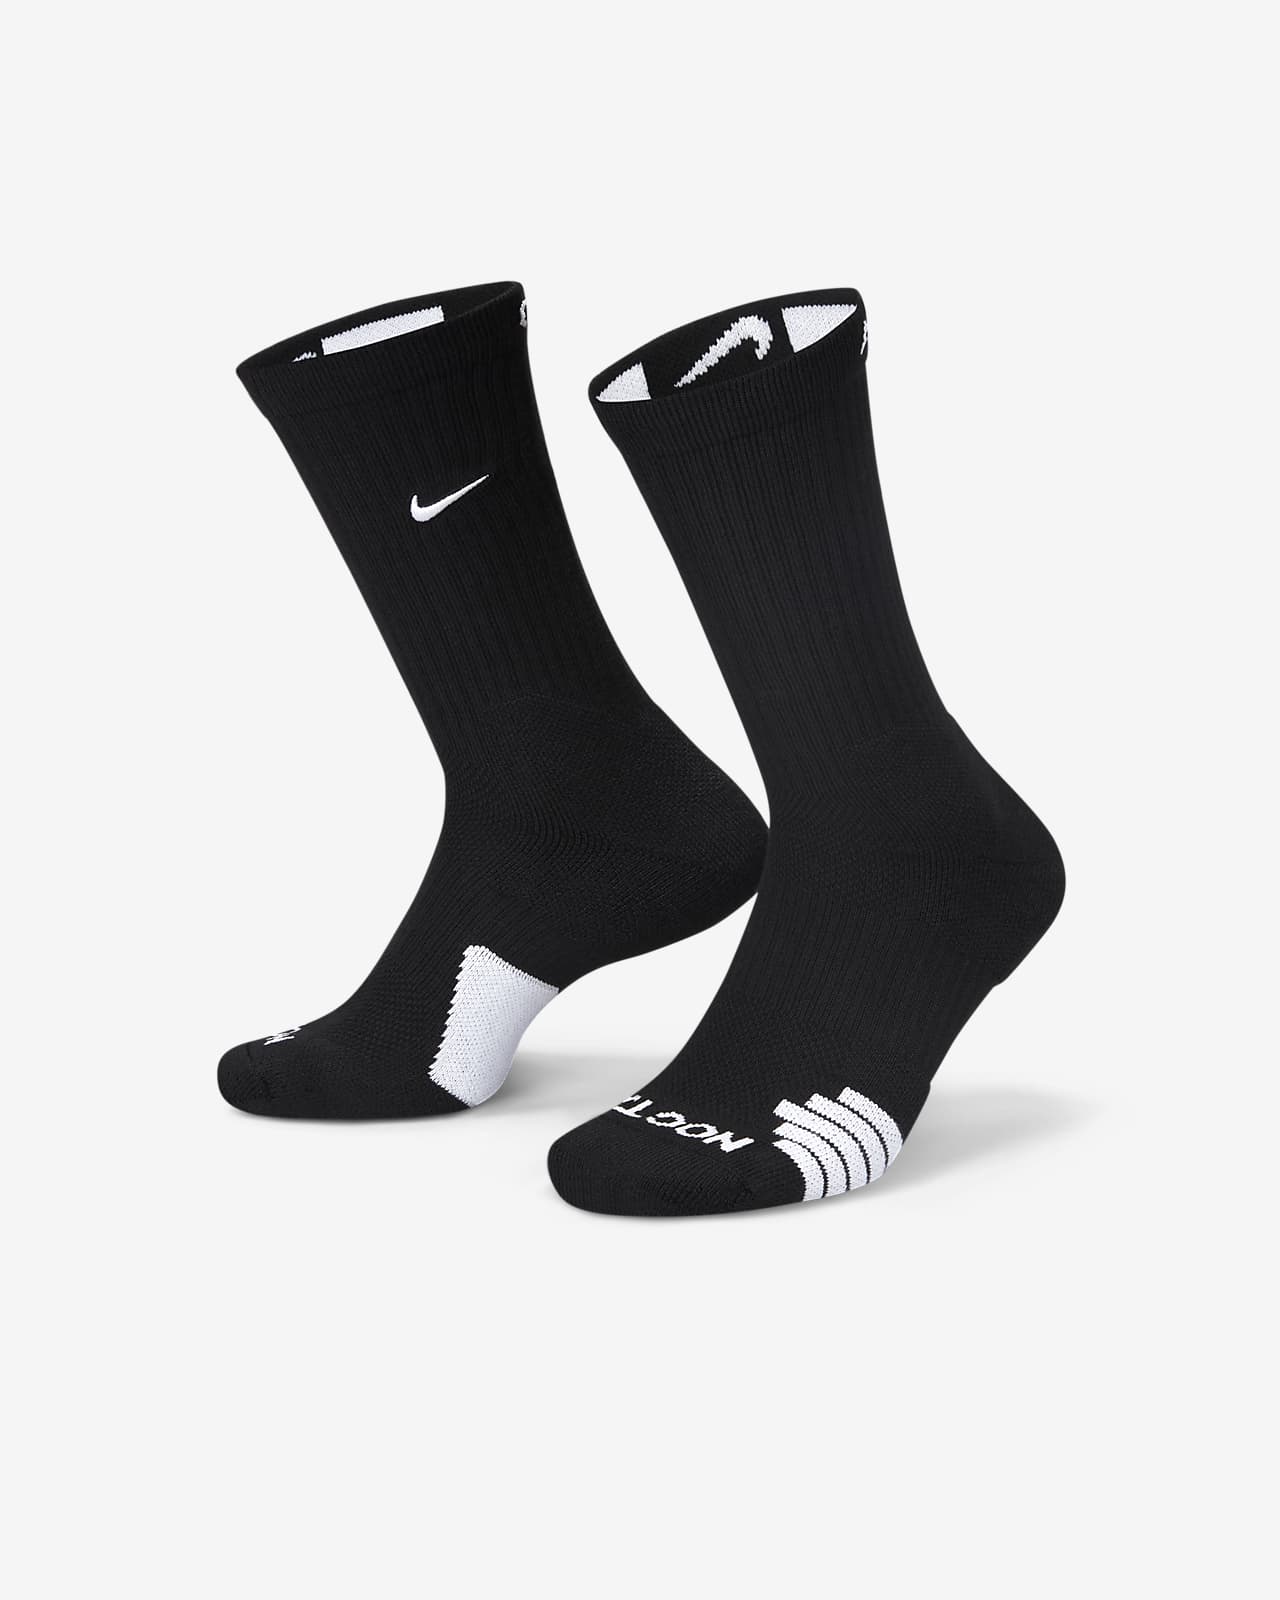 NOCTA Basketball Socks Pair). Nike.com